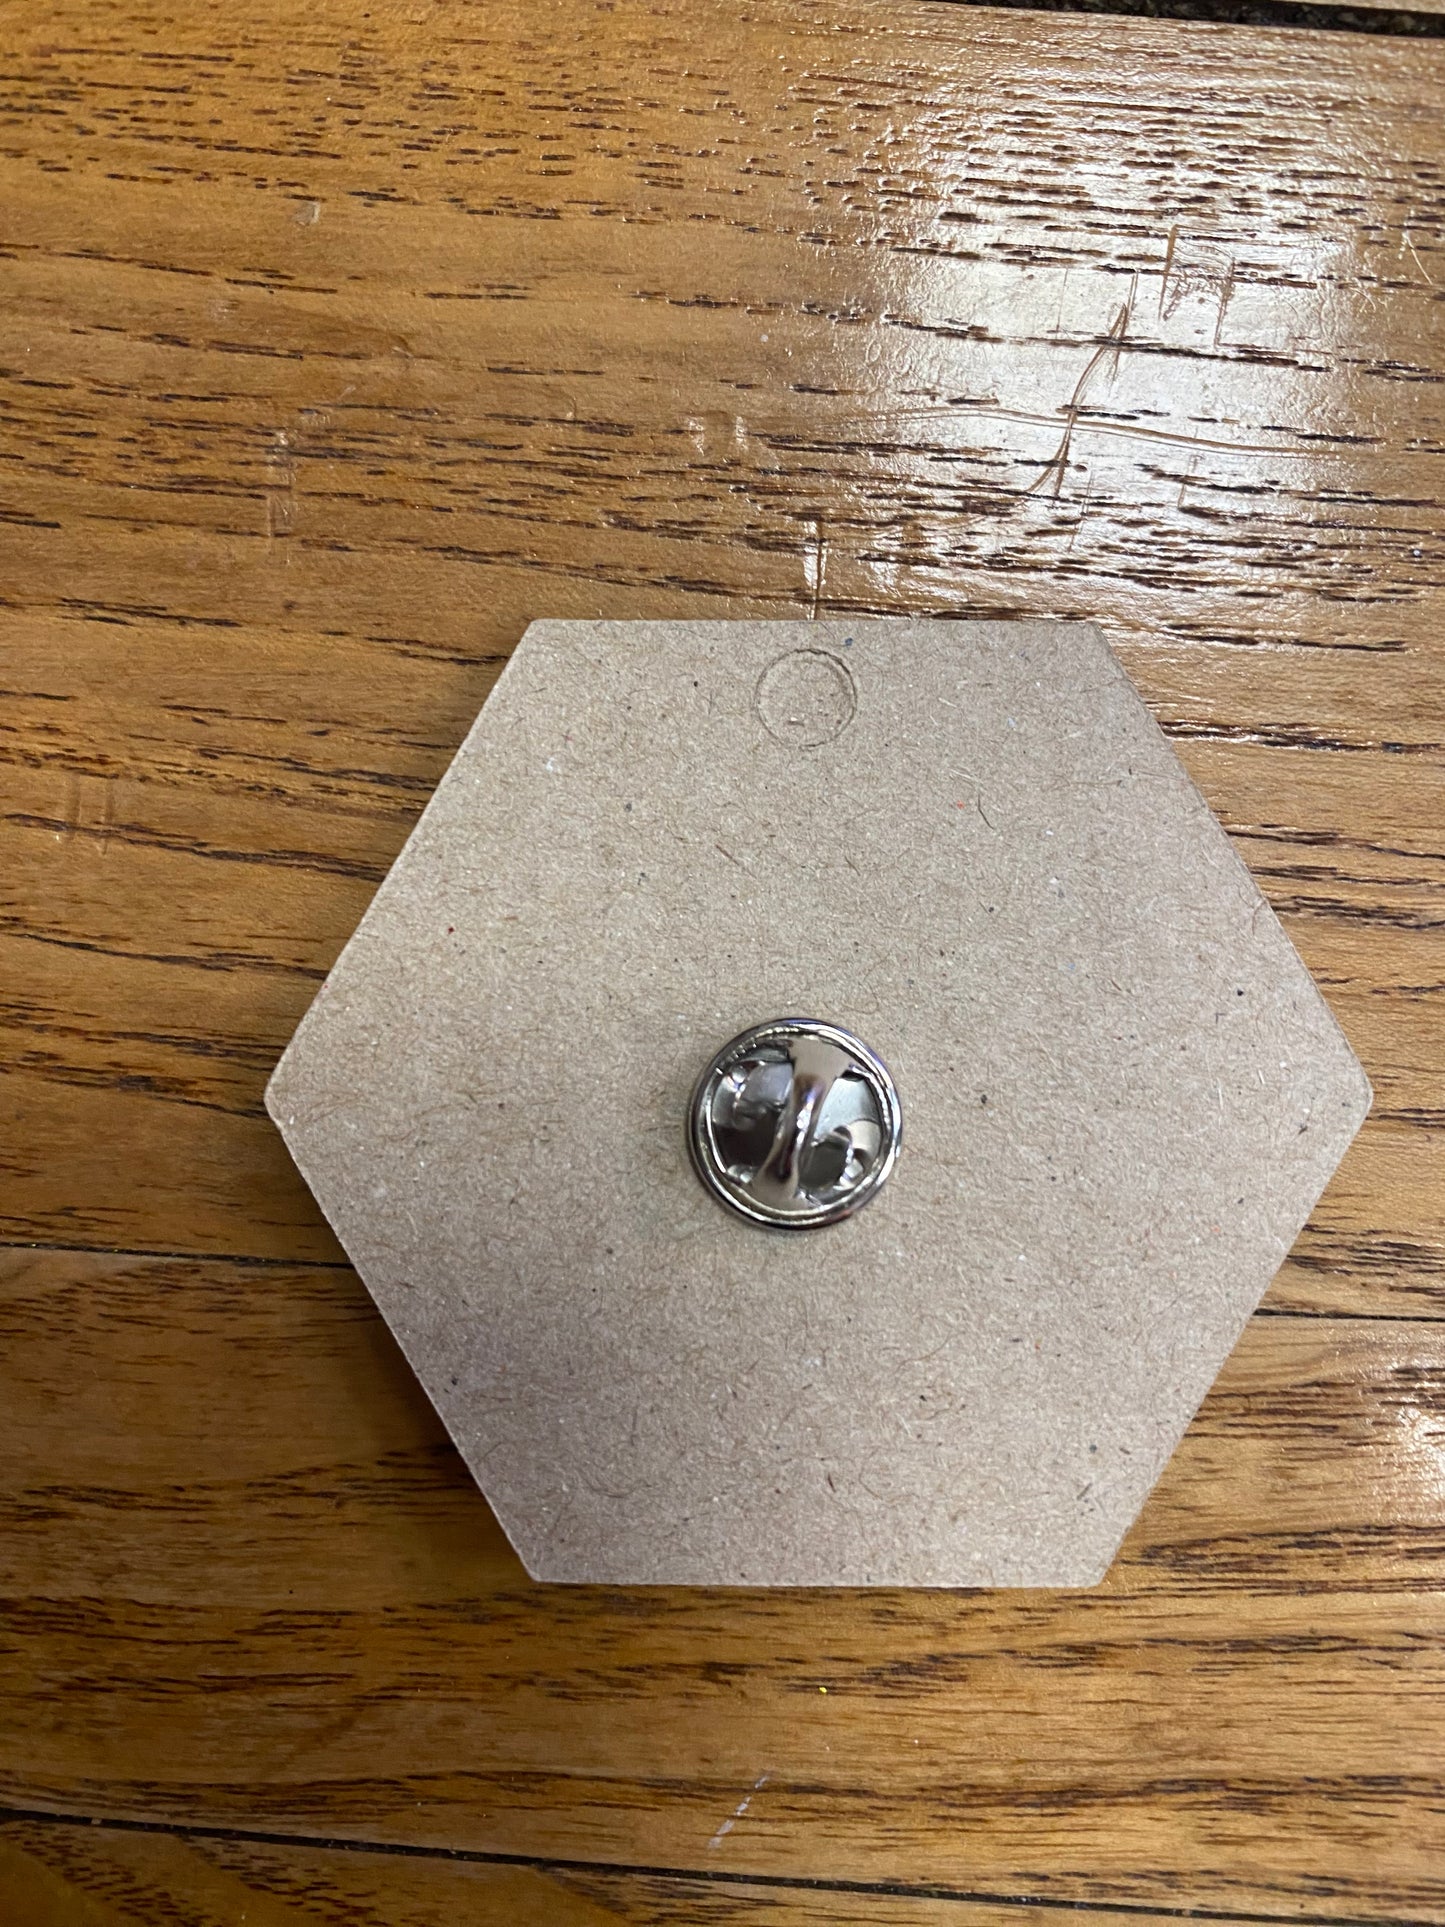 Hexagon Bee Pin Badge